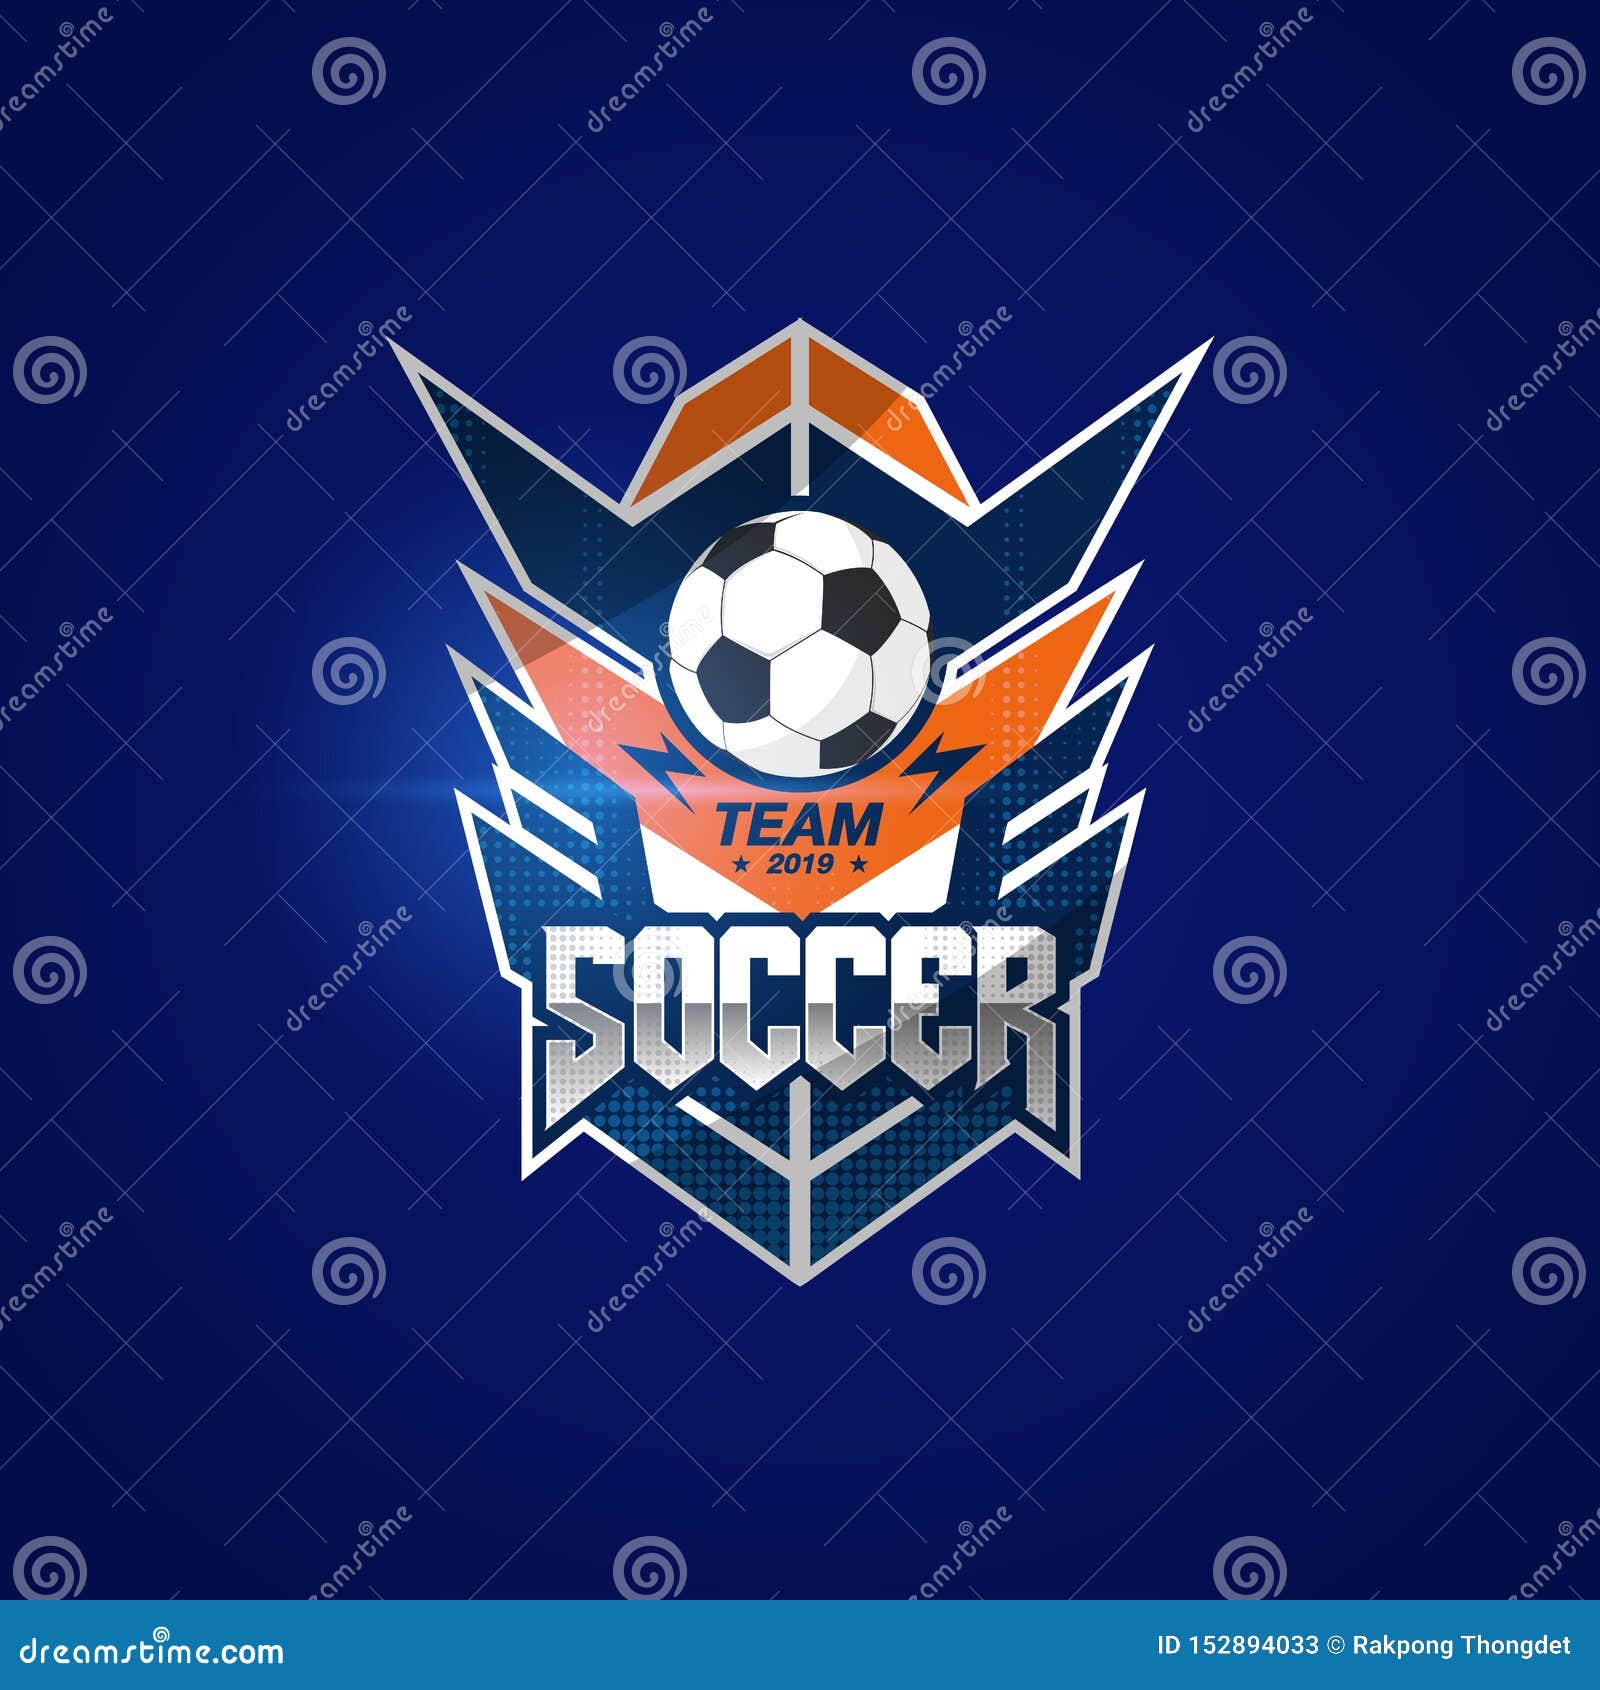 Soccer Football Badge Logo Design Templates | Sport Team Identity ...